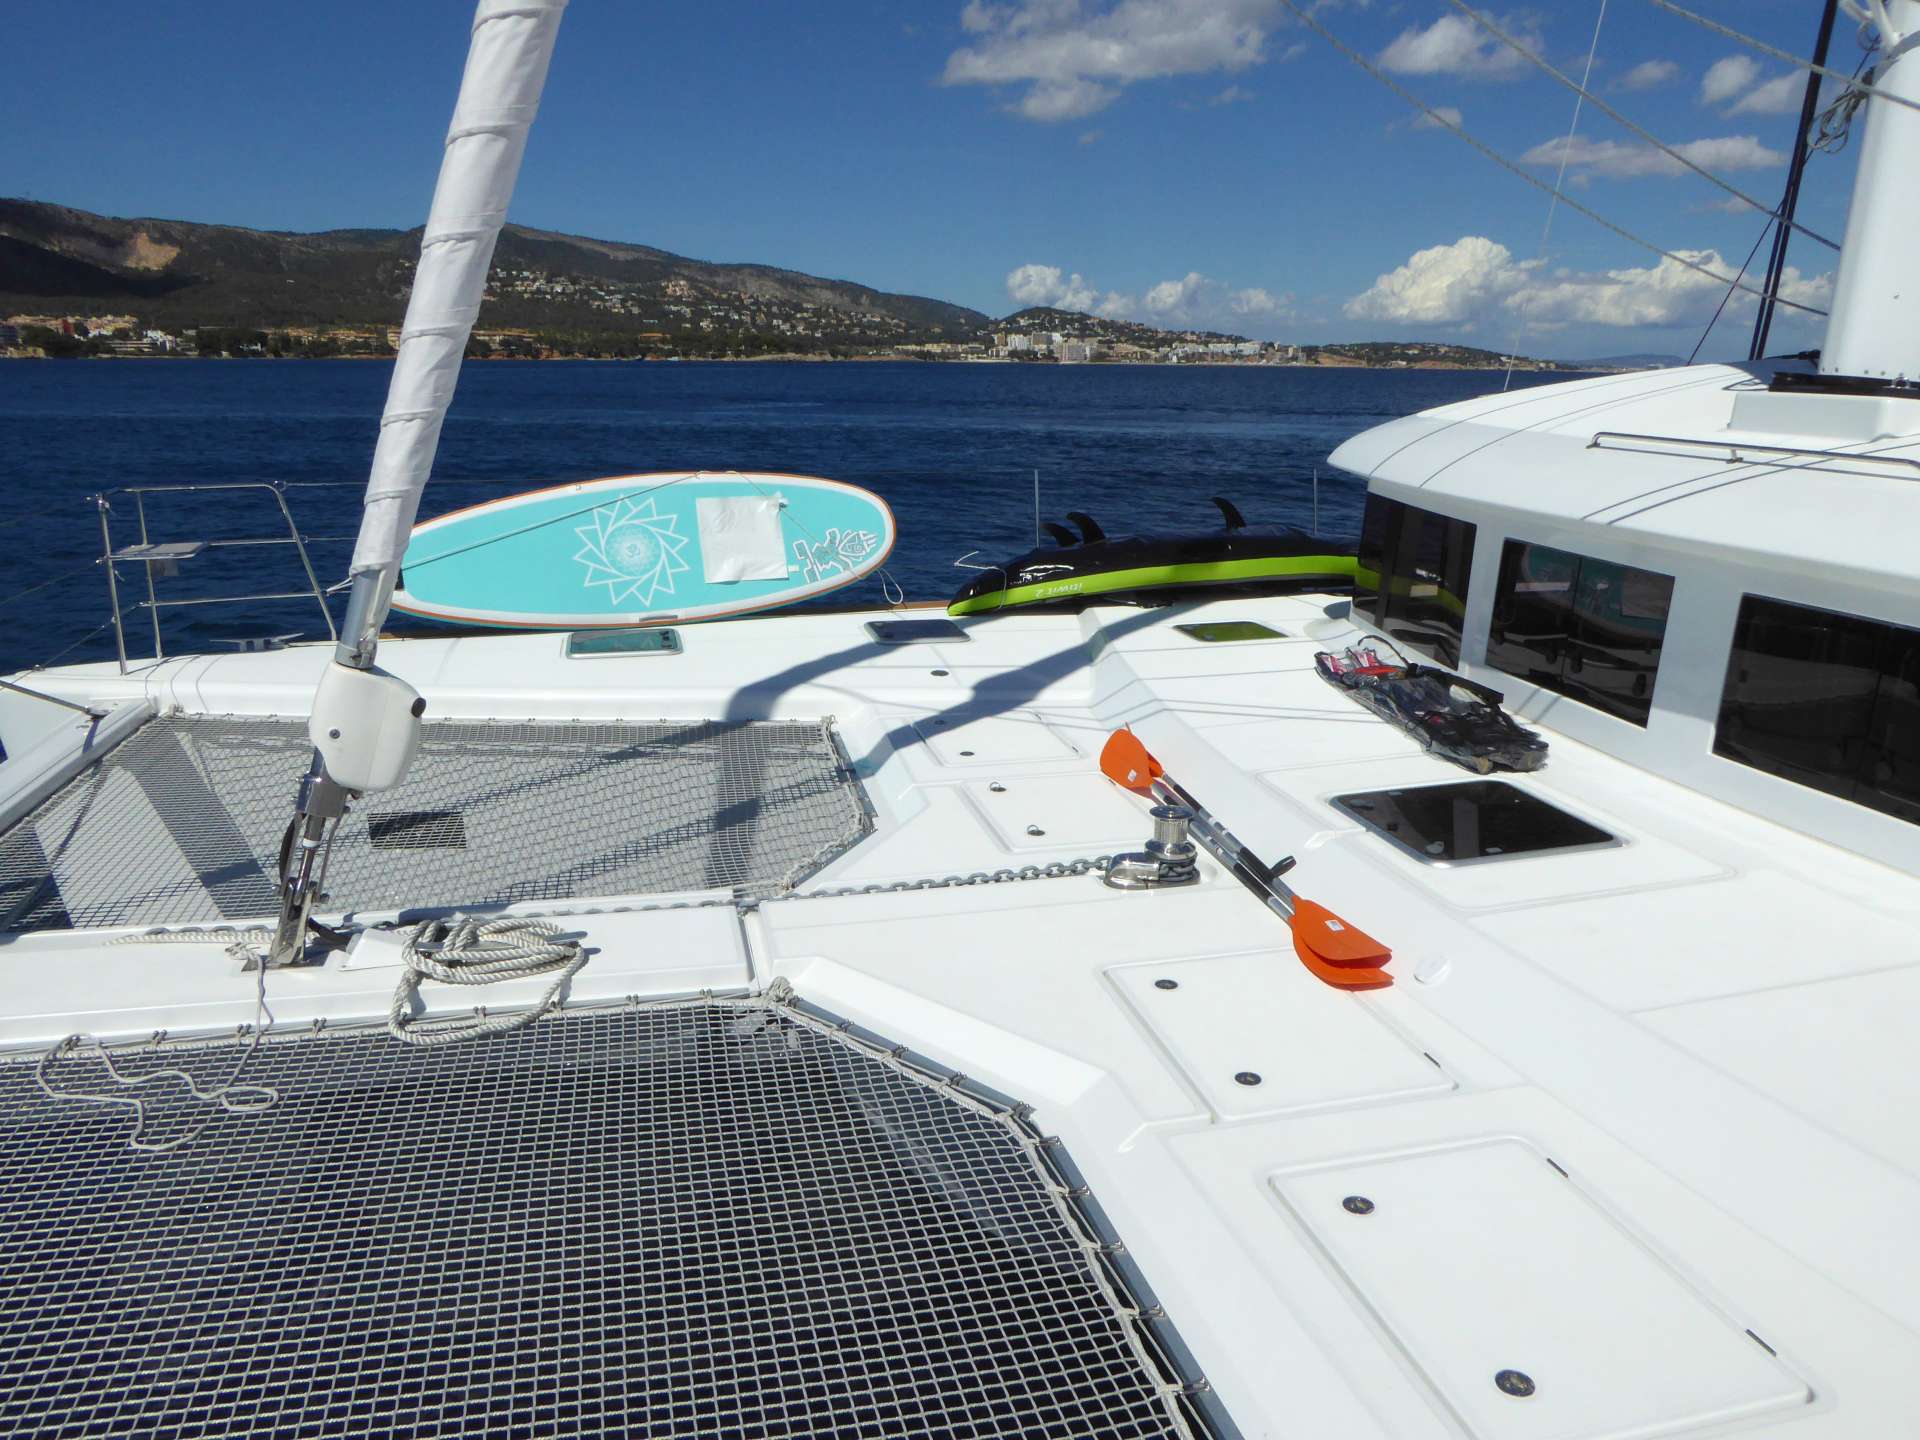 Catamaran Yacht 'LADY M' Enjoy the views!, 6 PAX, 2 Crew, 62.00 Ft, 18.00 Meters, Built 2015, Lagoon